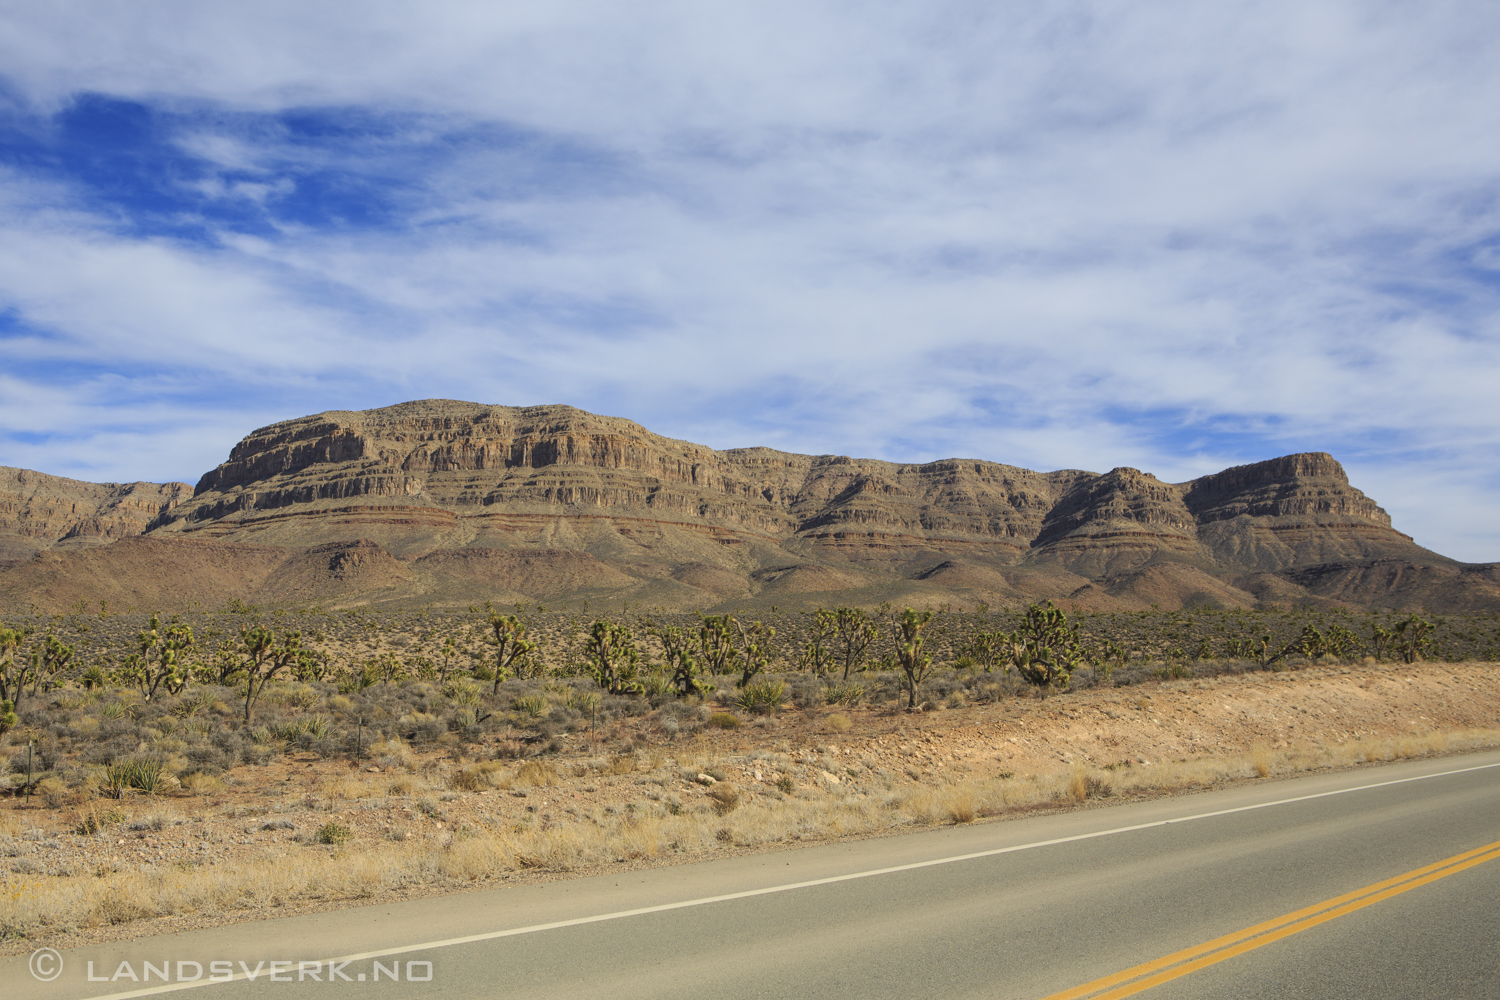 Arizona. 

(Canon EOS 5D Mark III / Canon EF 24-70mm f/2.8 L USM)